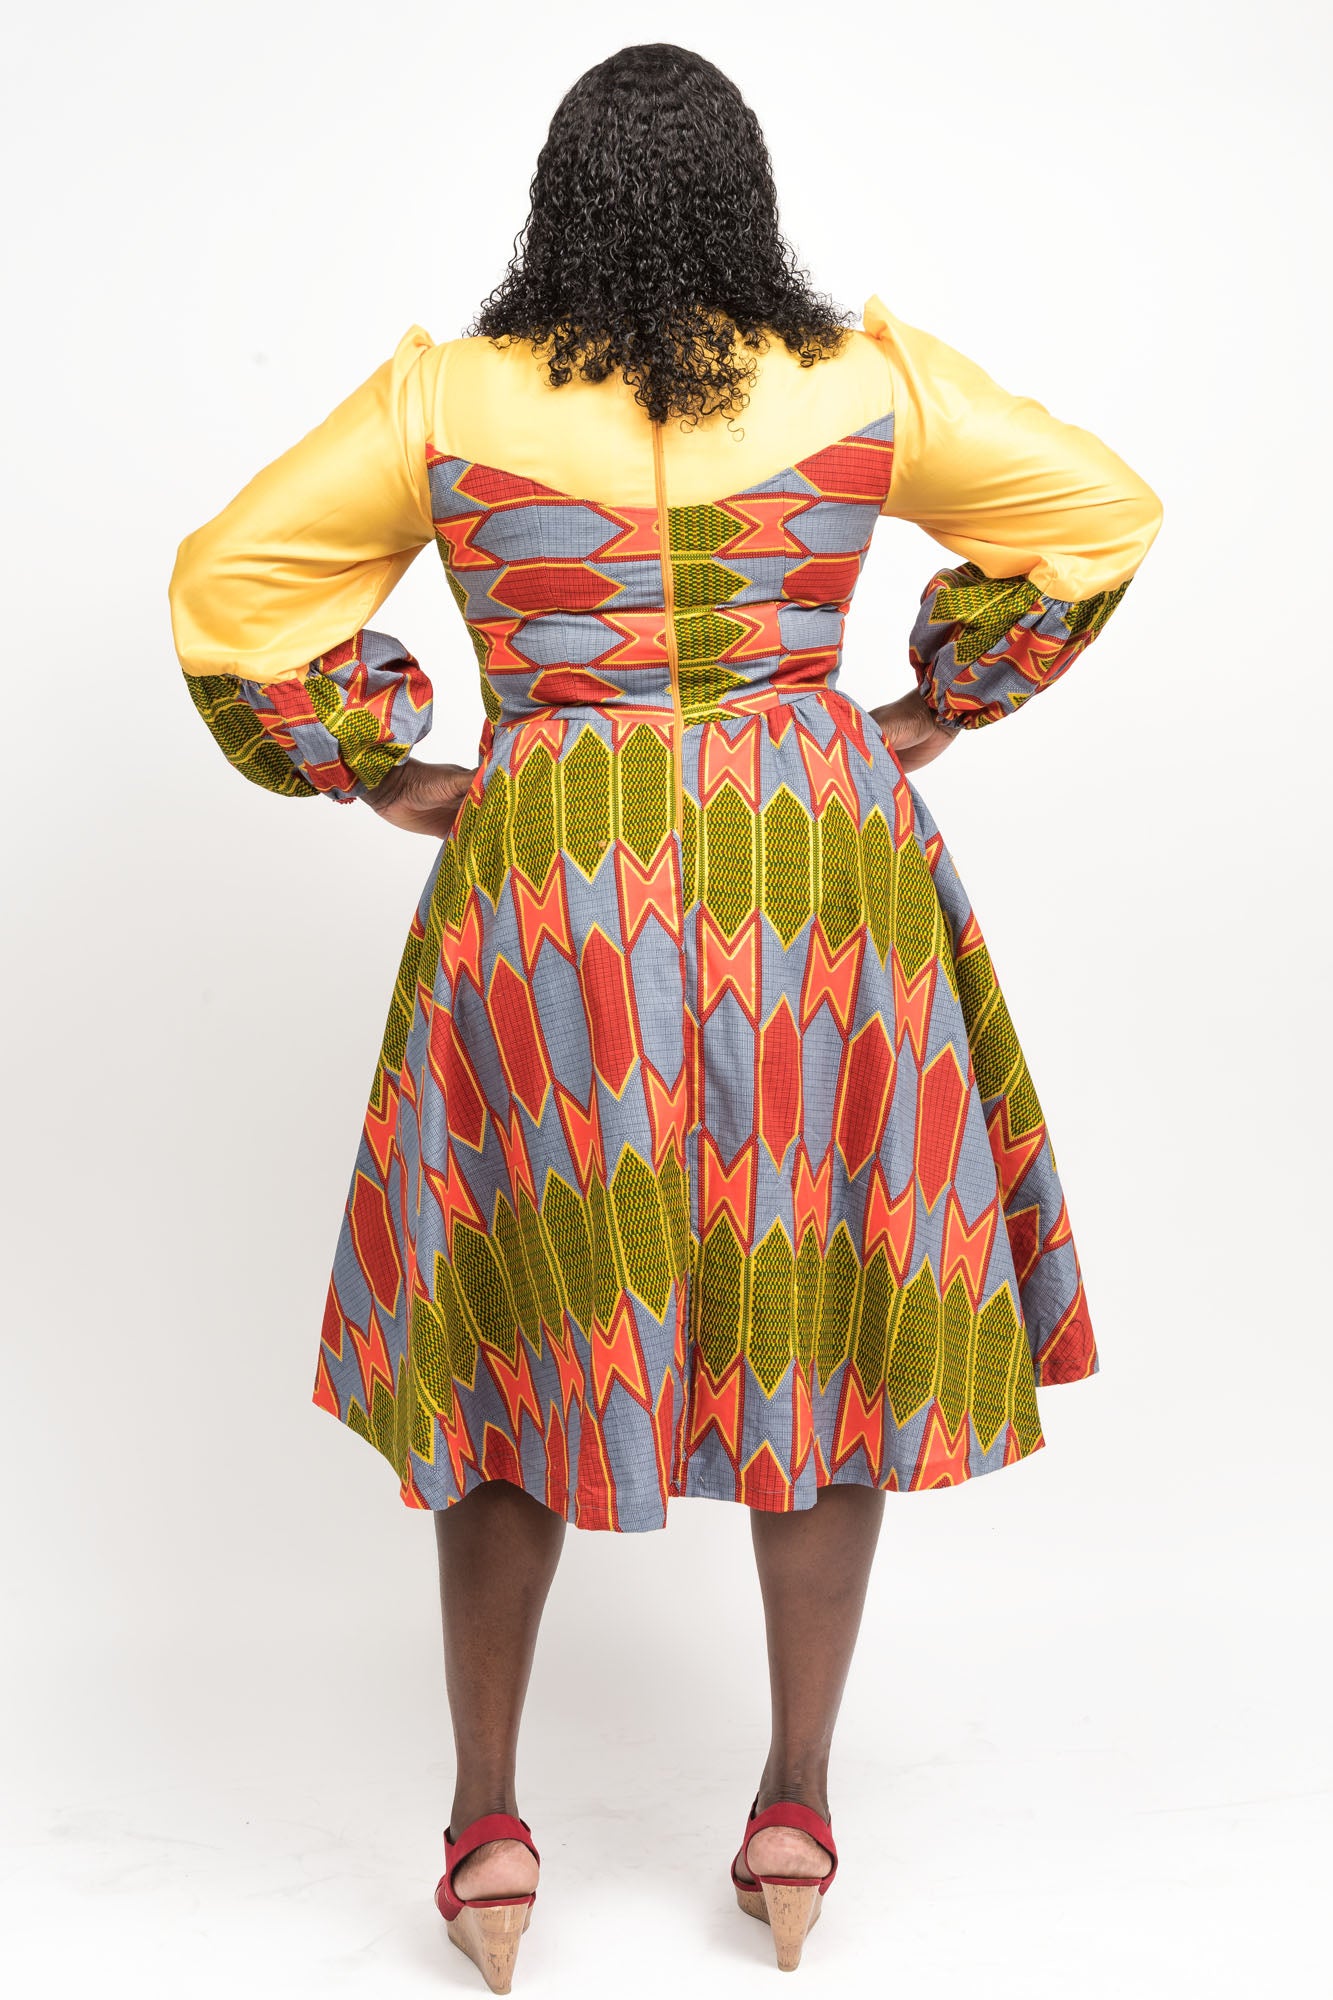 Yawa African Print Dress